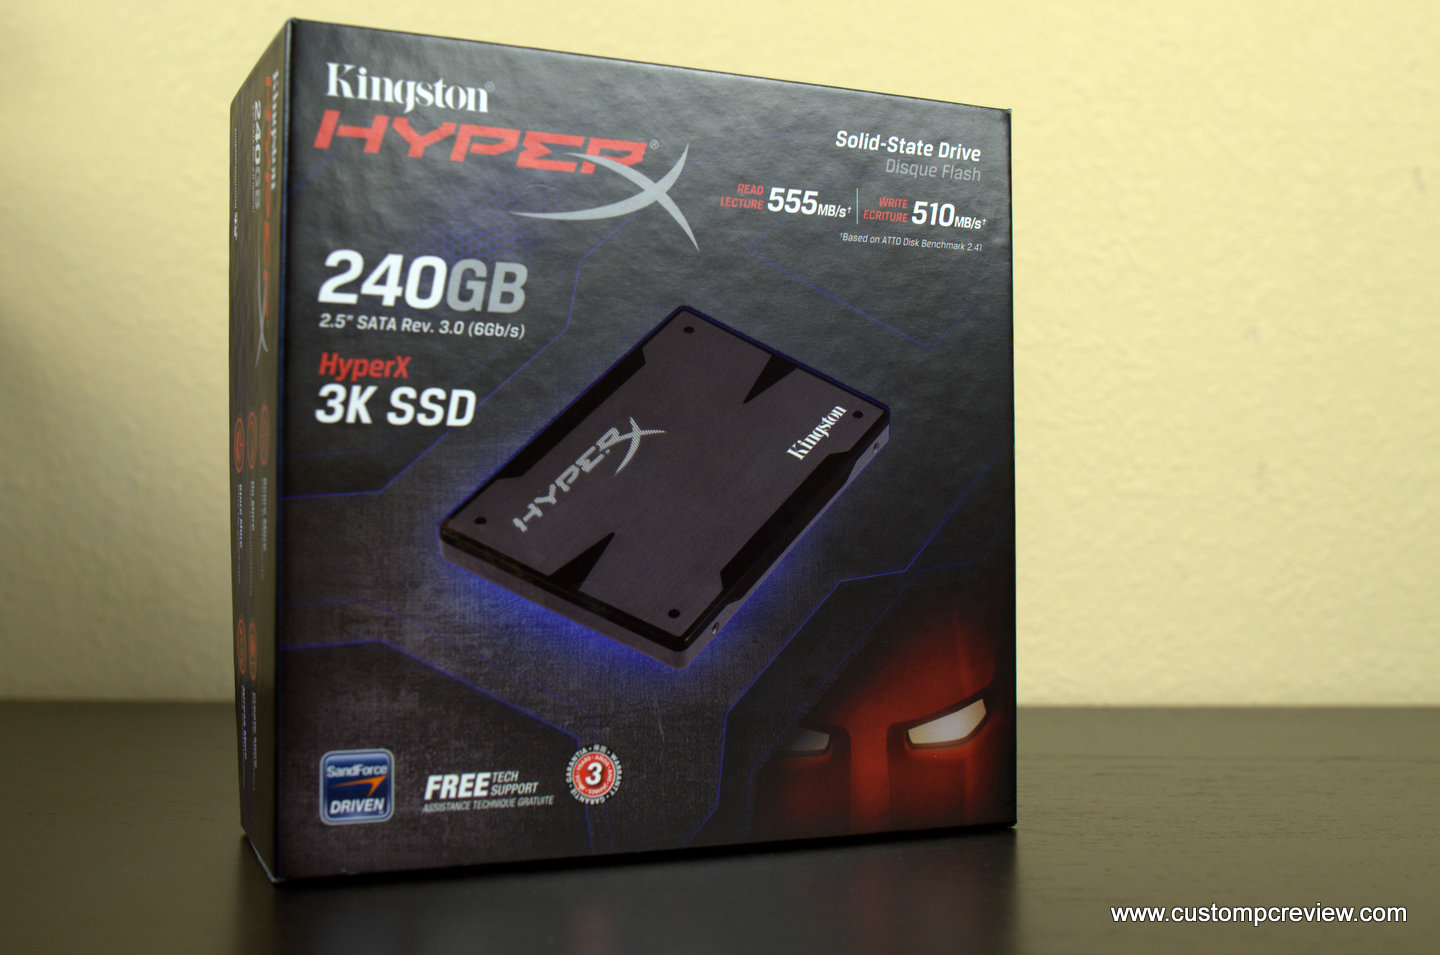 Kingston HyperX 3K 240GB SSD Review | Custom PC Review